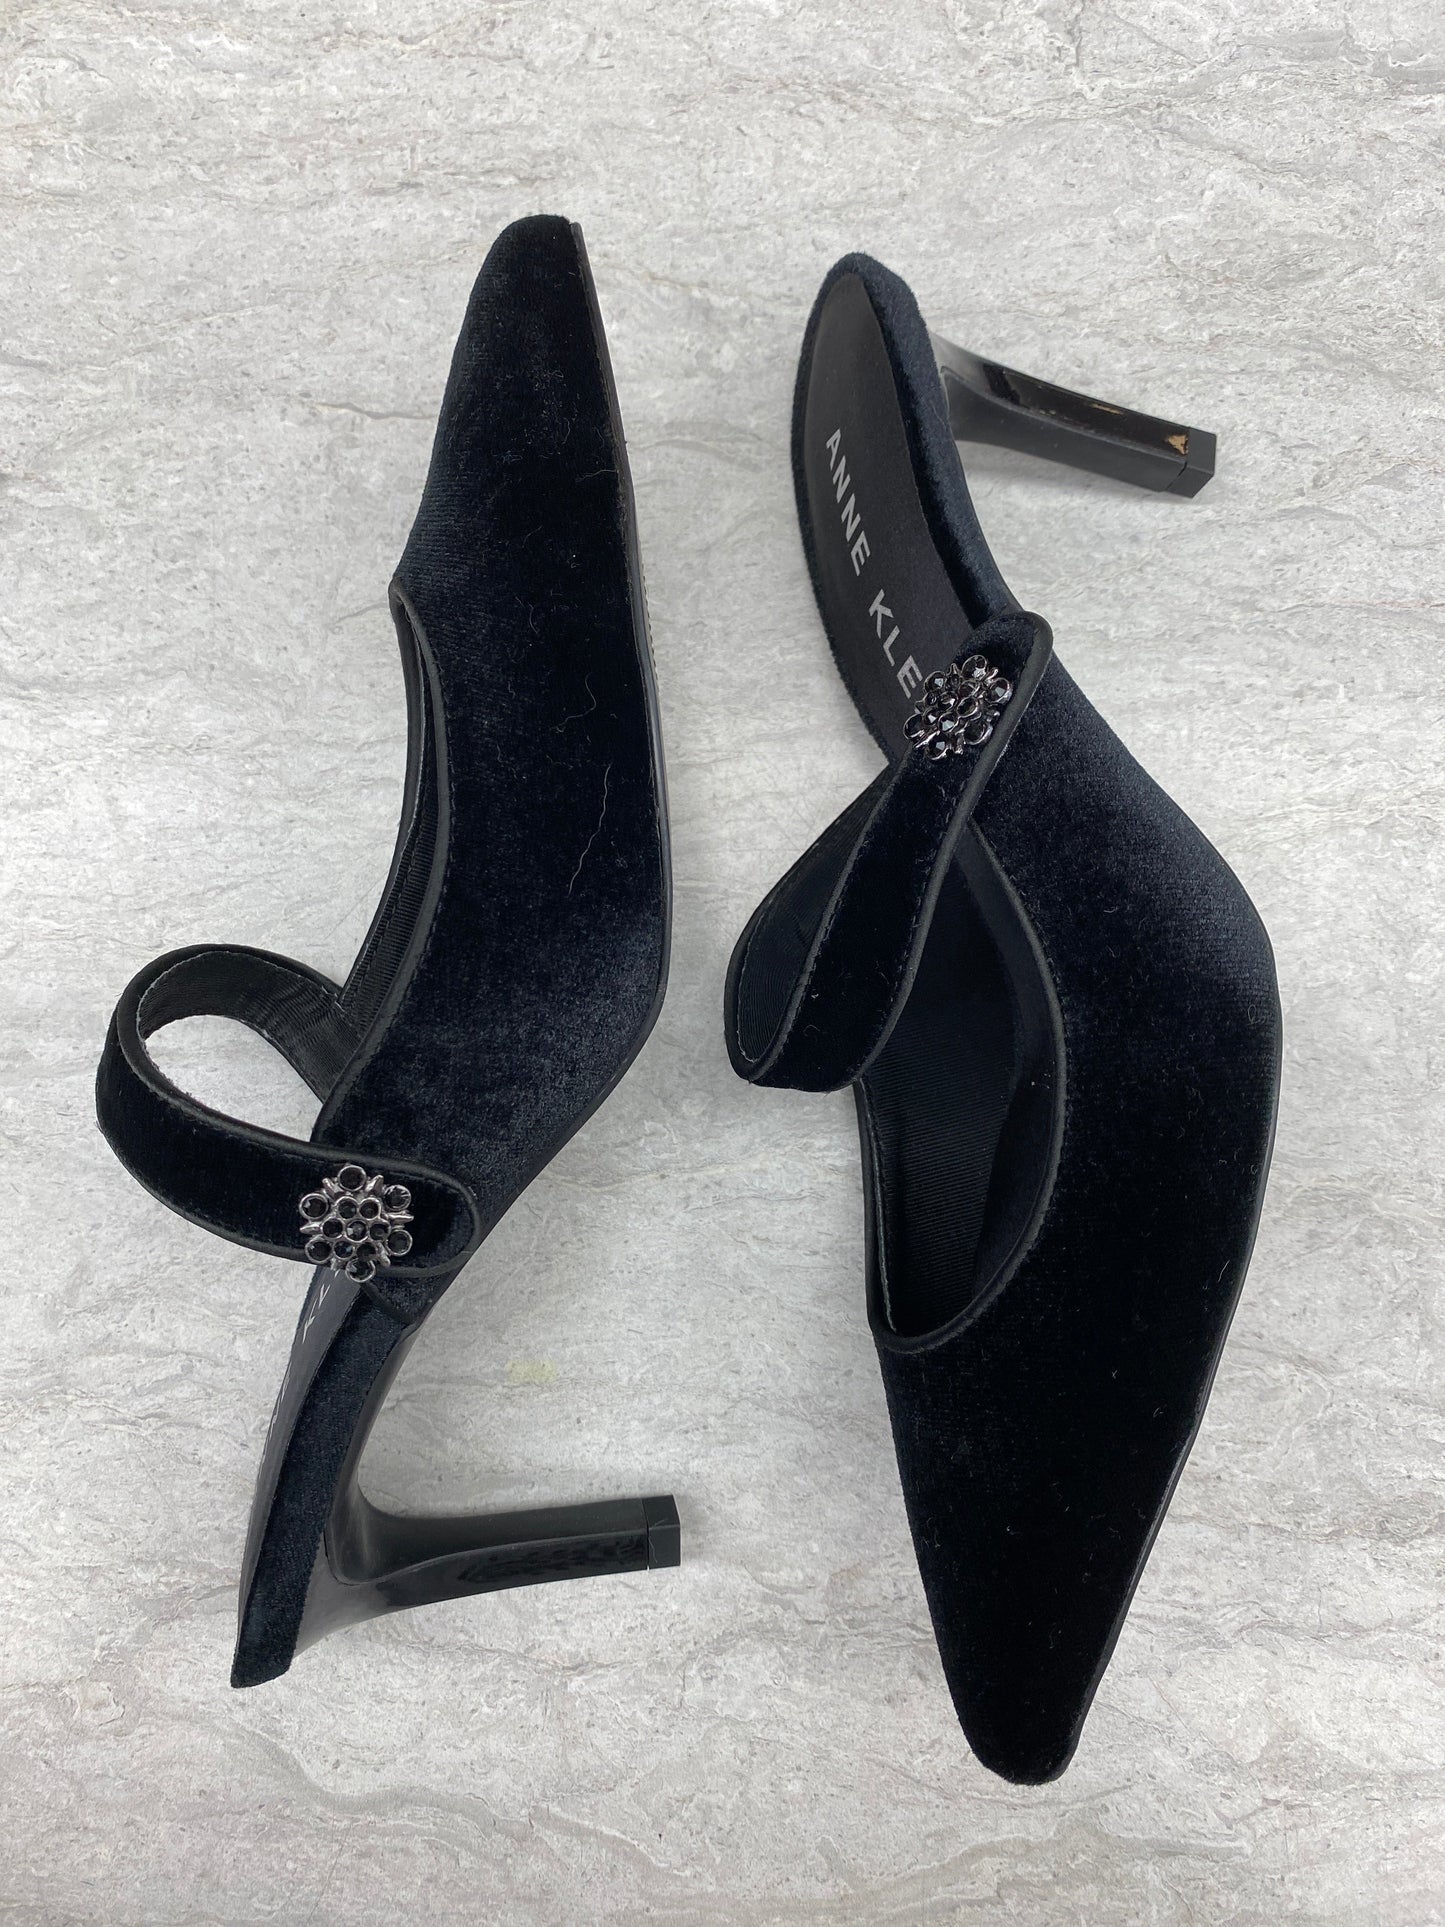 Shoes Heels Stiletto By Anne Klein  Size: 7